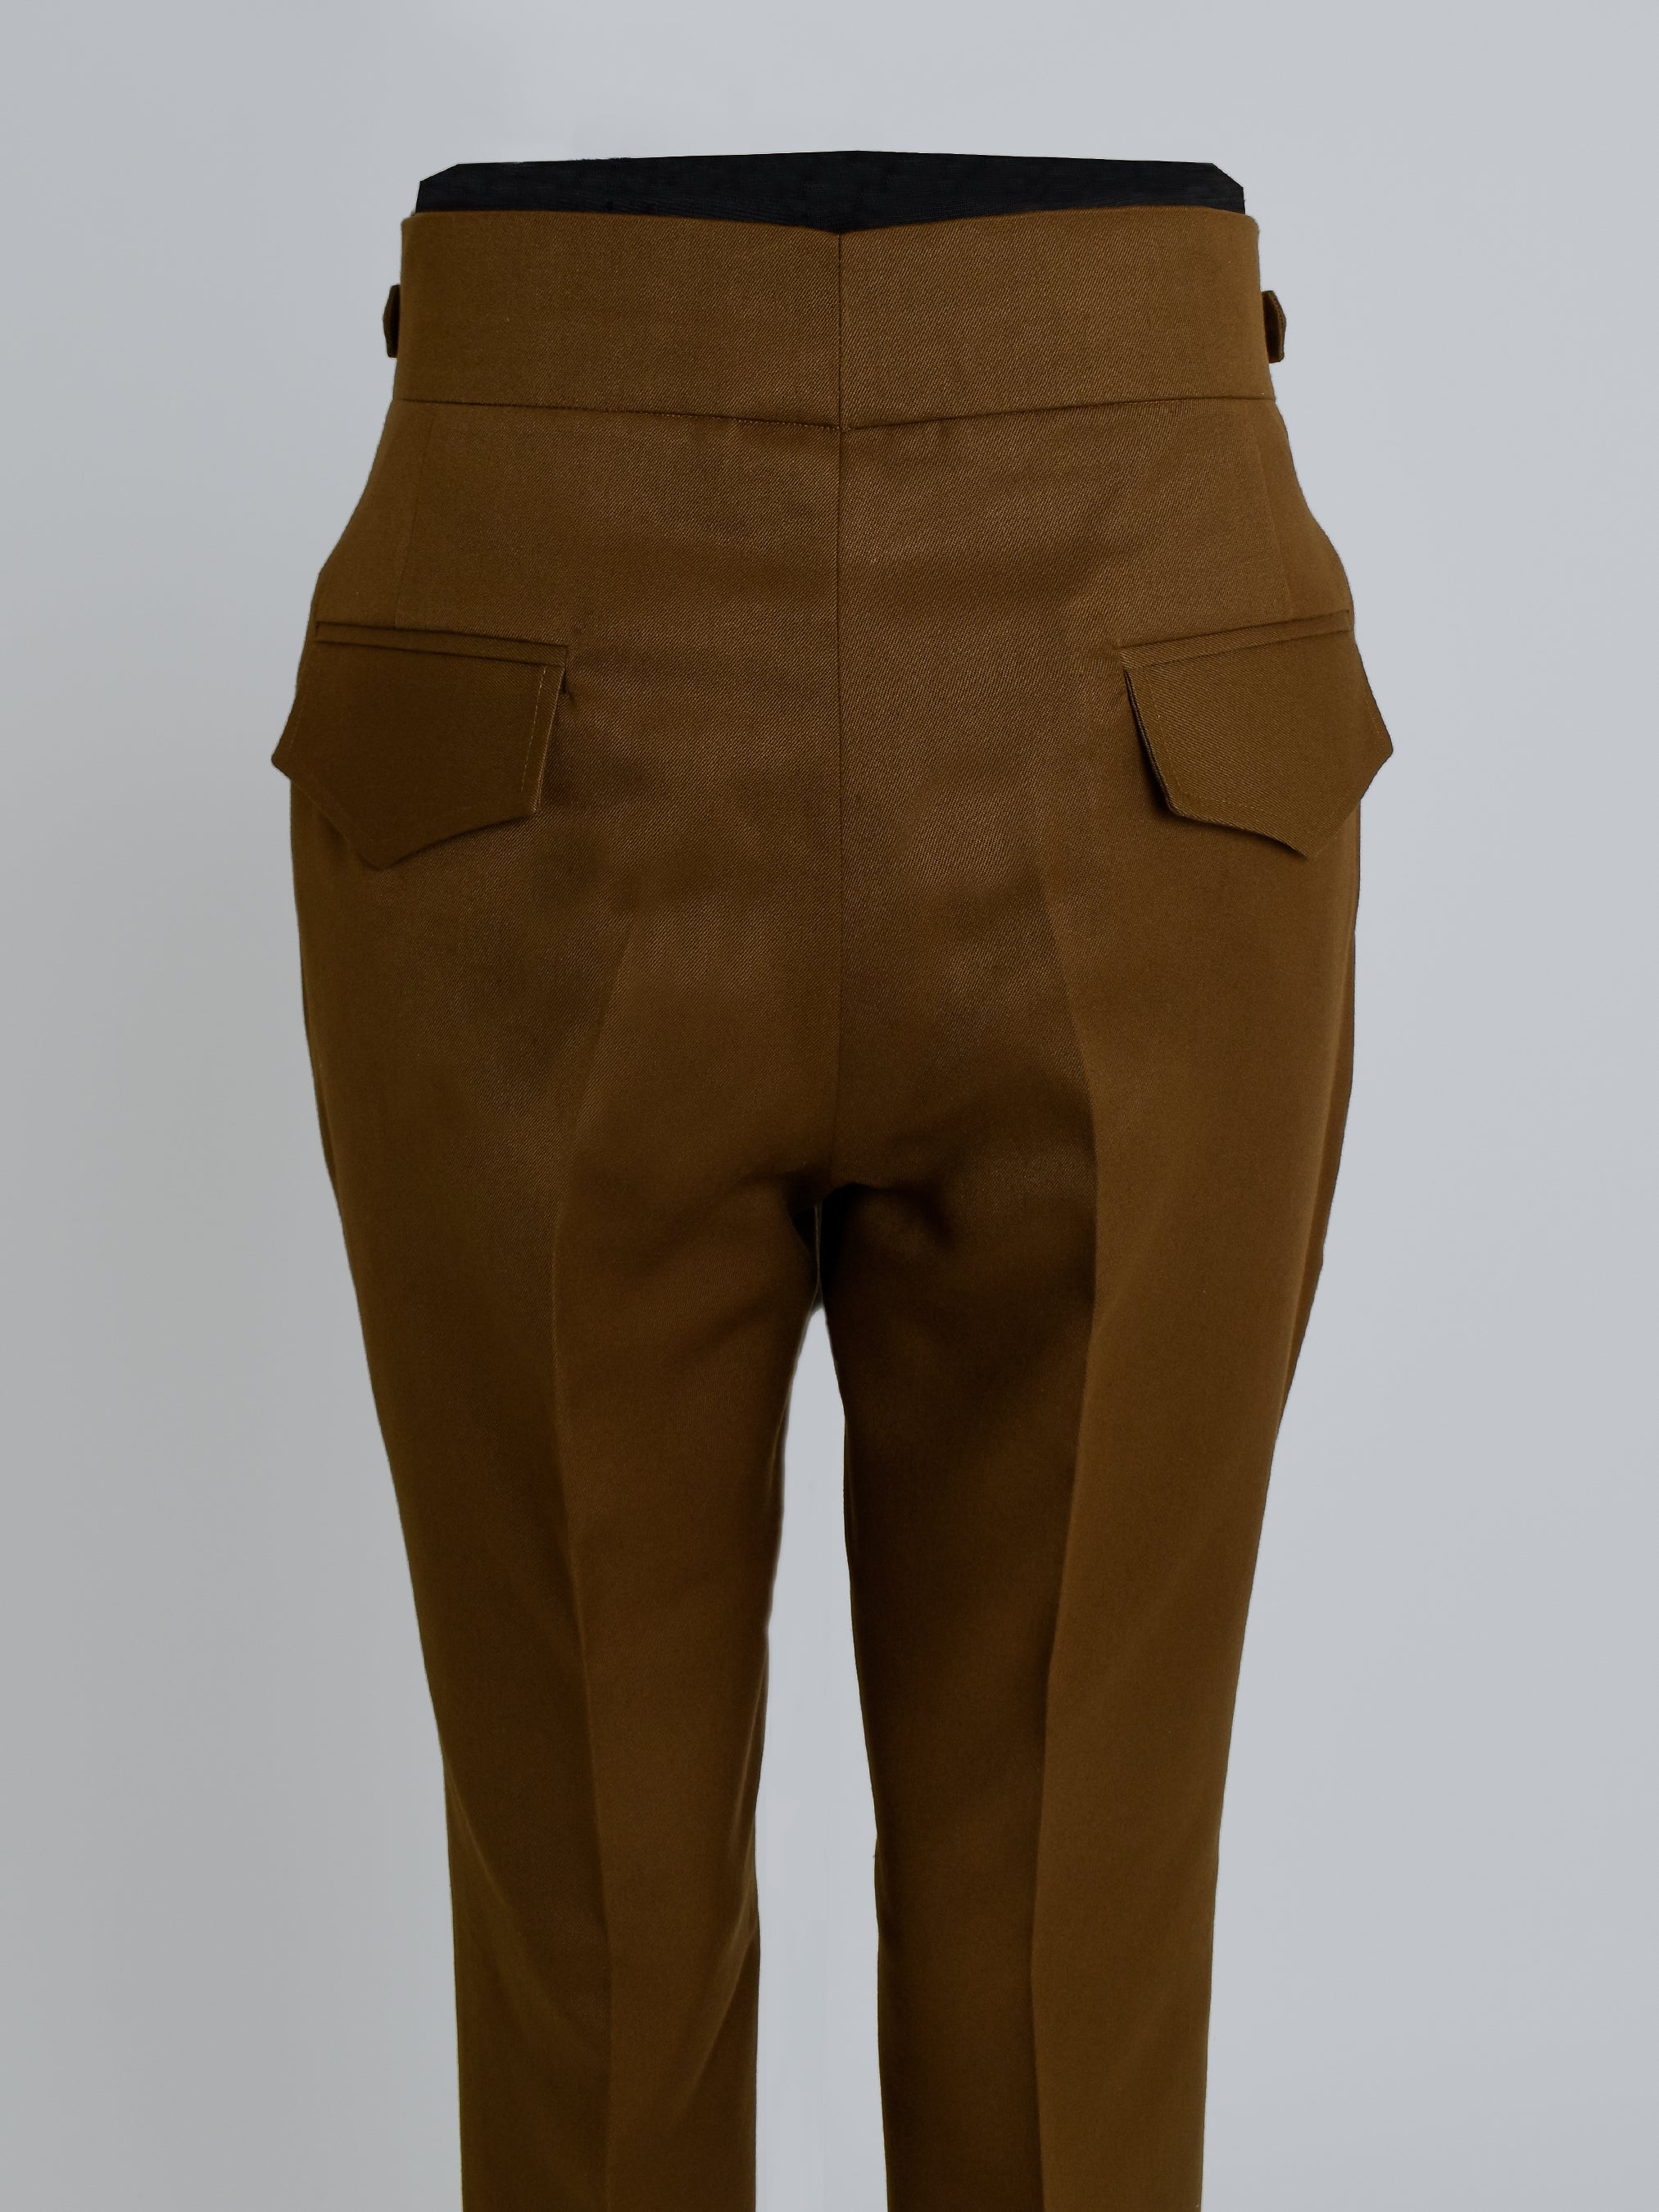 Imperial Gurkha Trousers